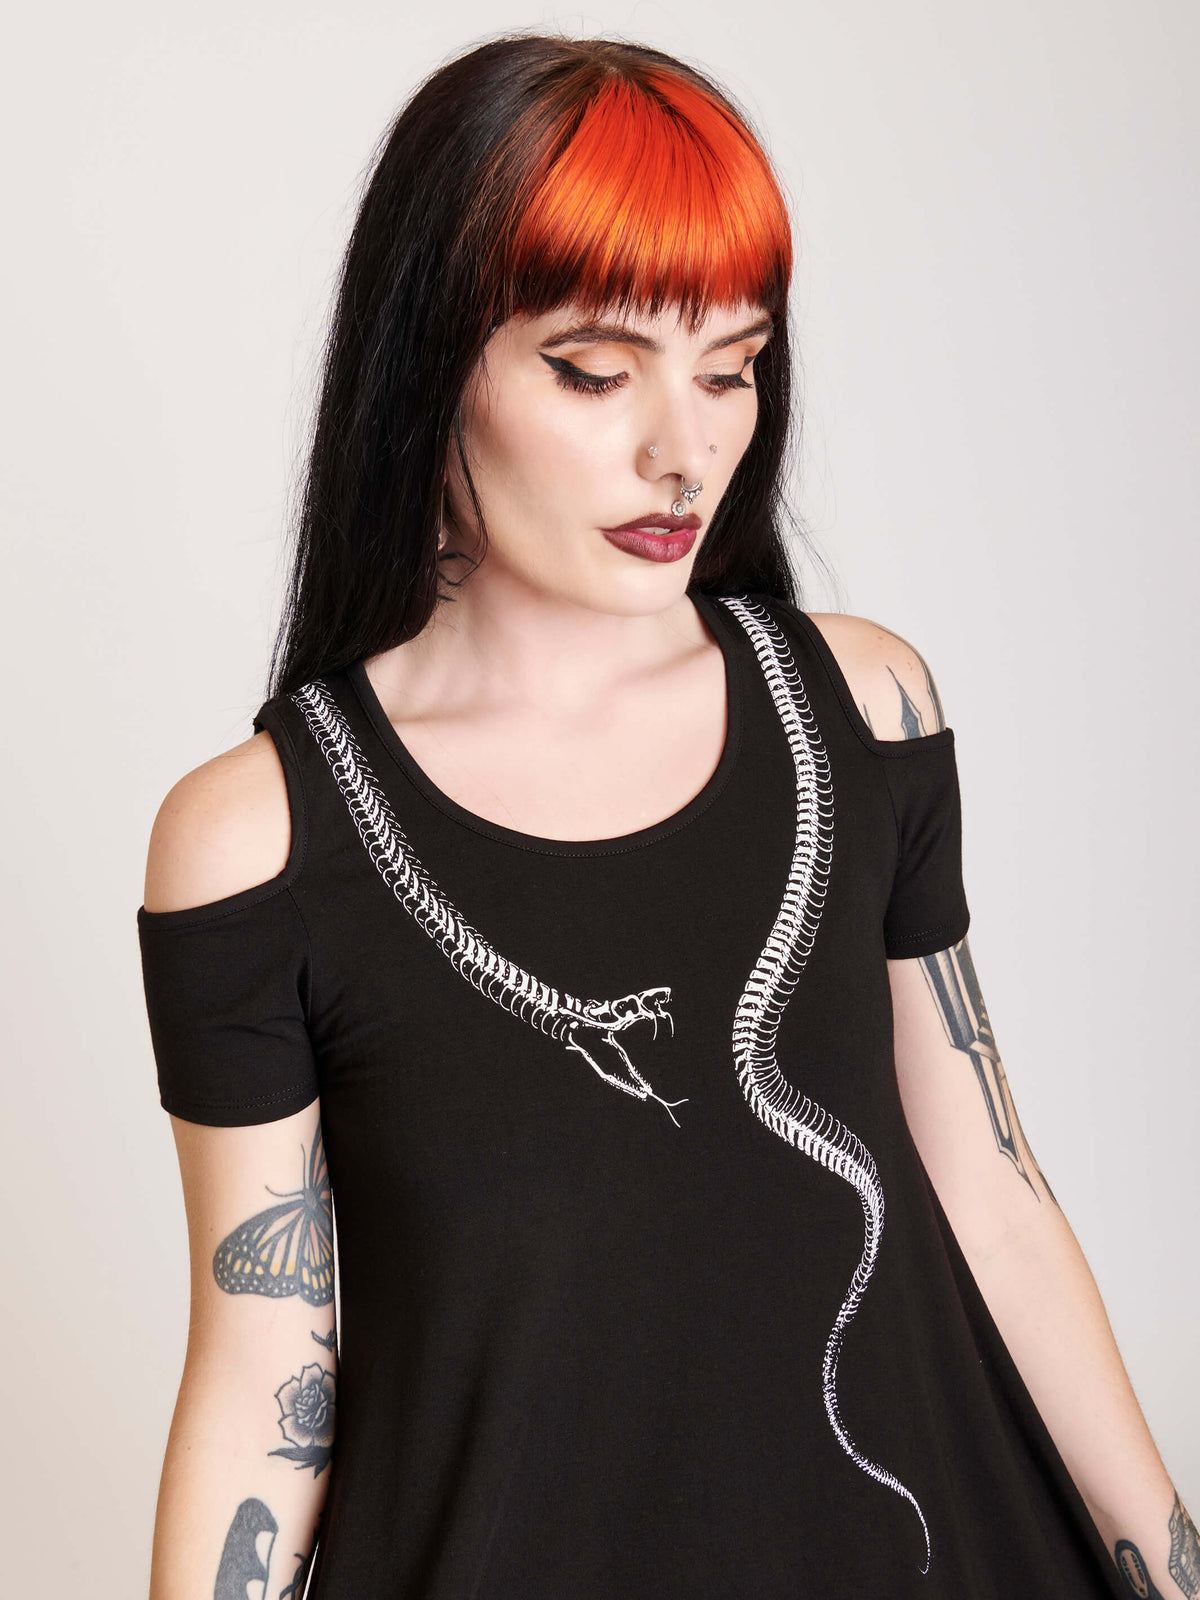 Black dress with skeleton snake art around the neckline